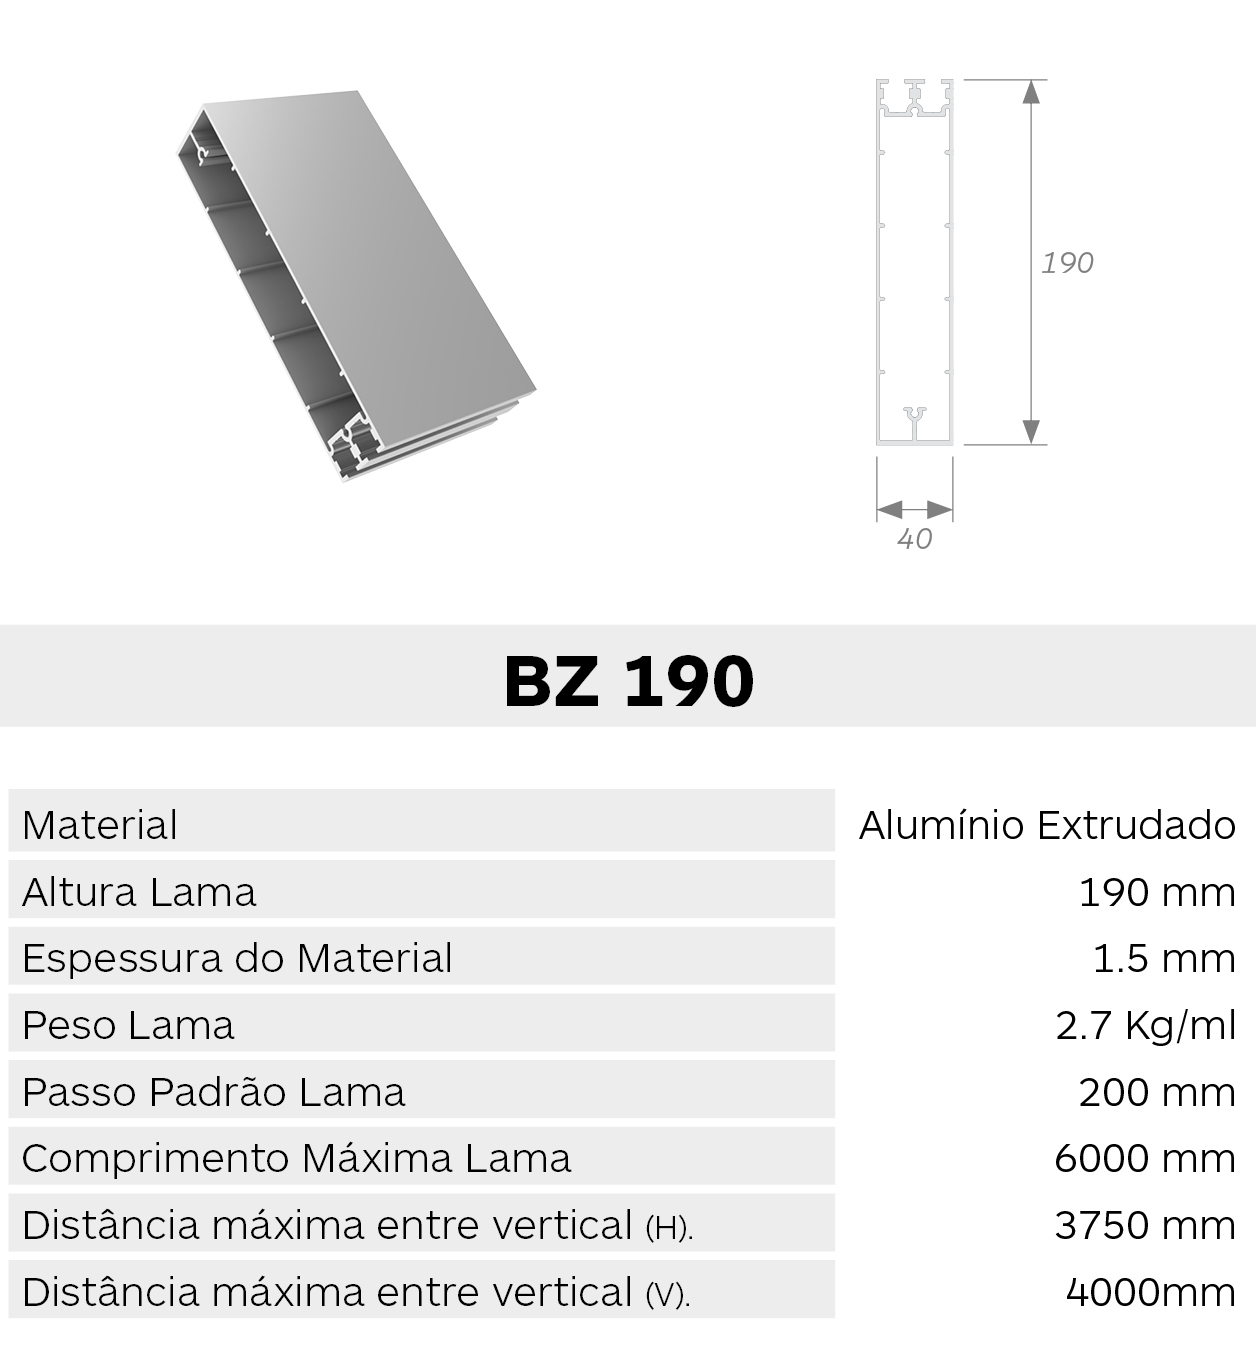 Caracteristica lama E170 BZ